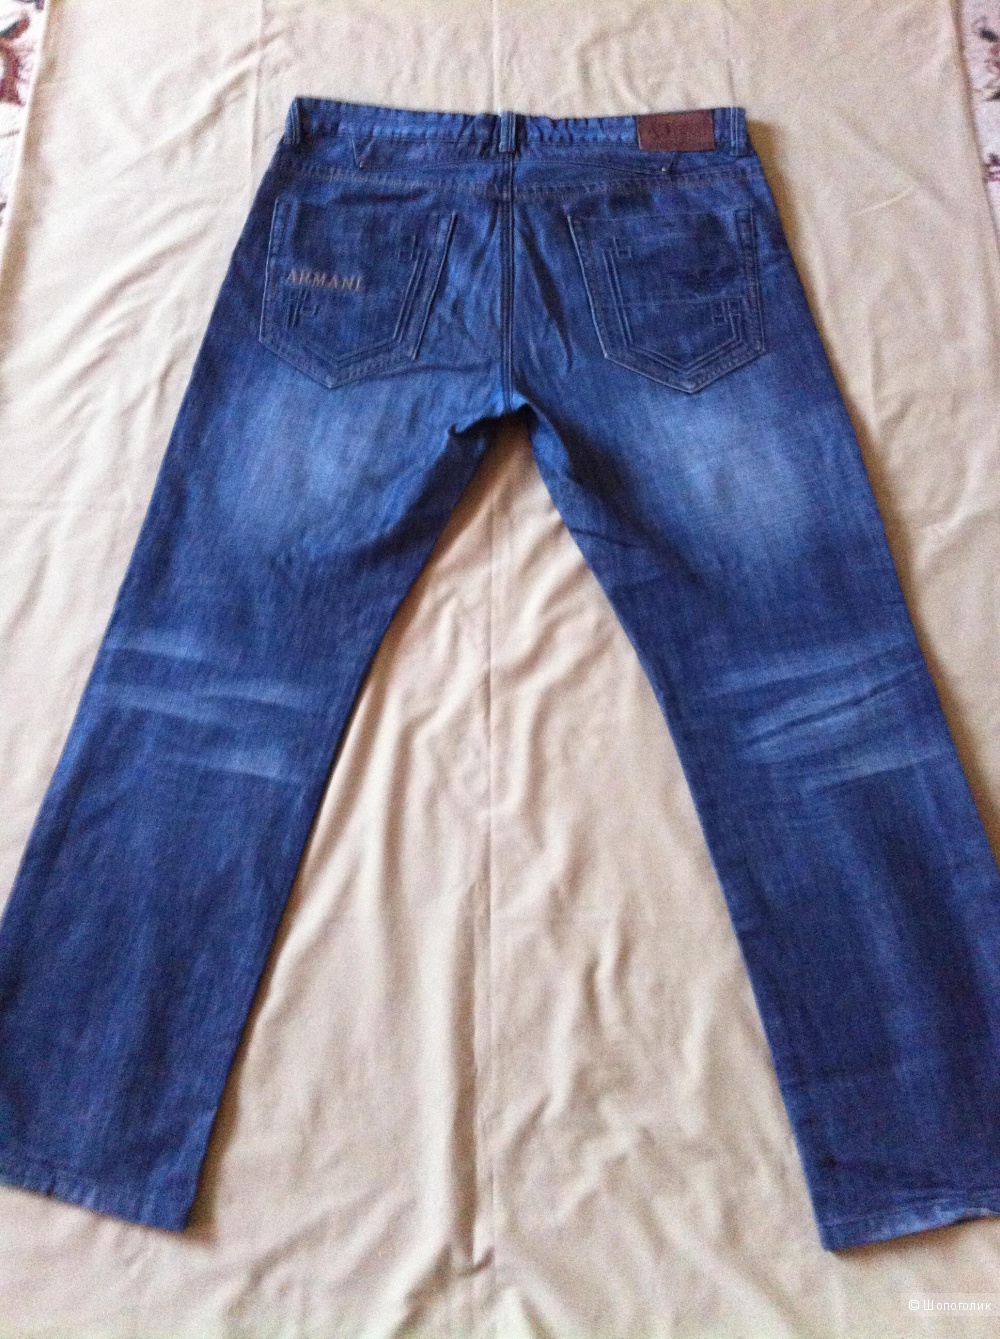 Продам джинсы ARMANI jeans, размер 50